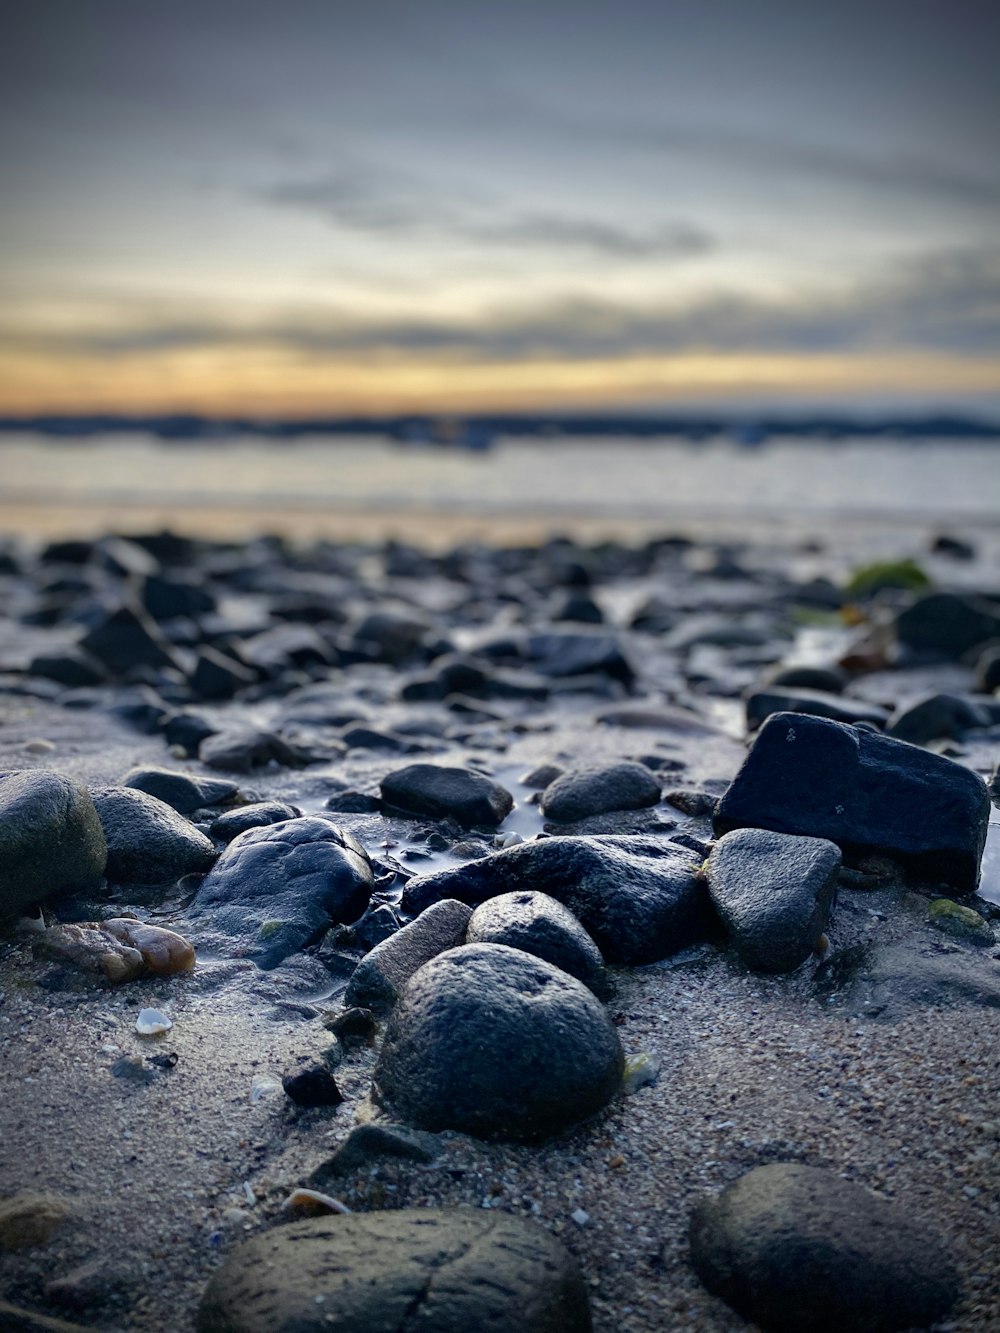 black stones on beach shore during sunset